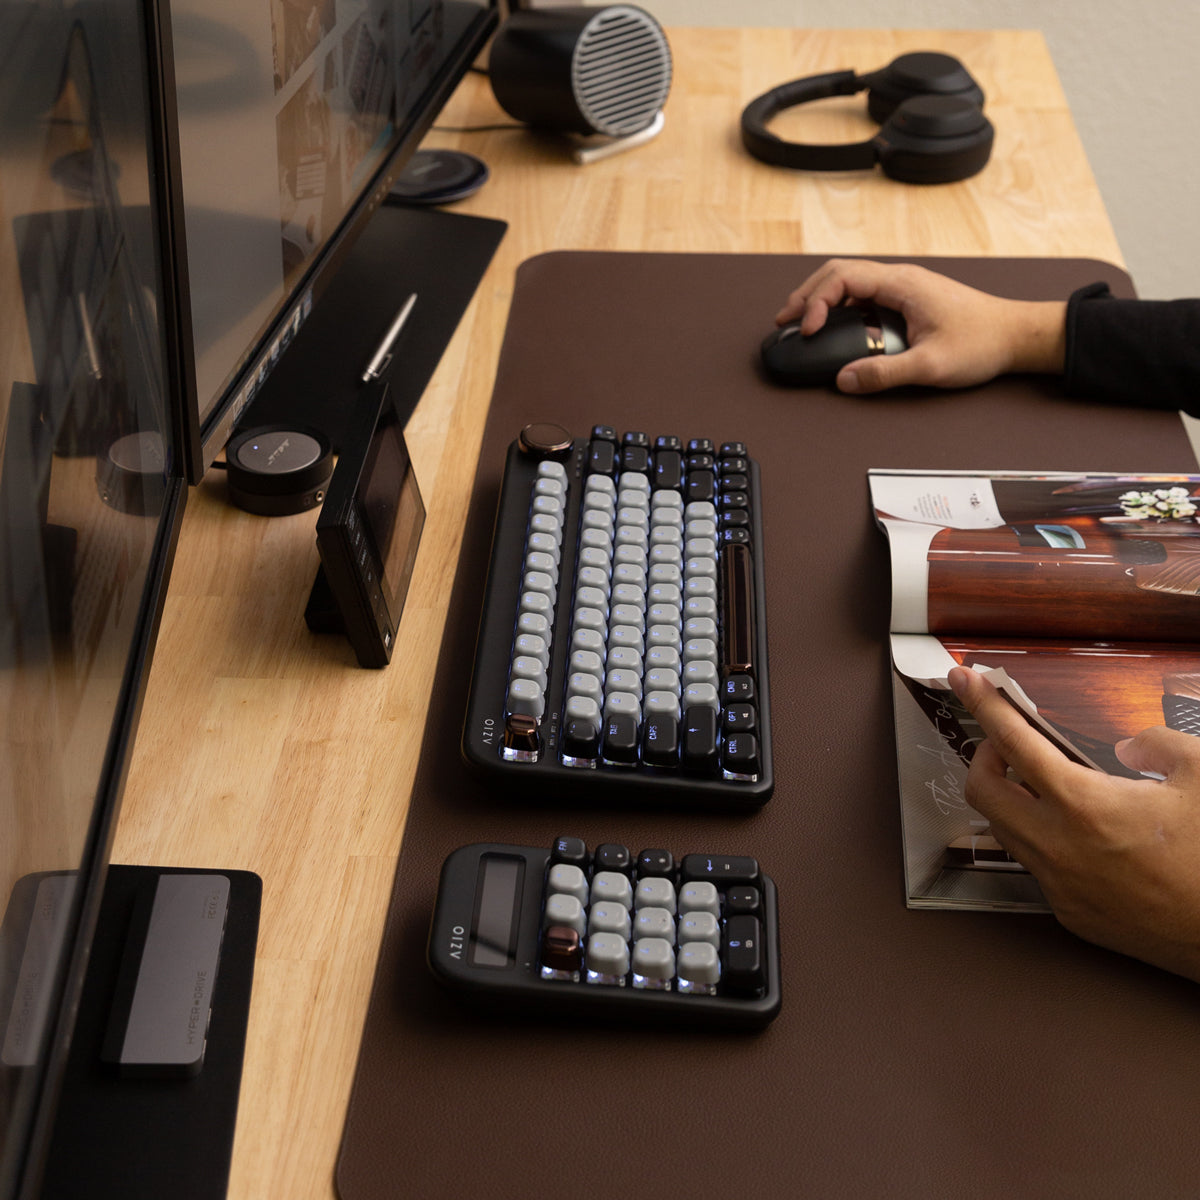 Drahtlose Izo-Tastatur (roter Schalter)